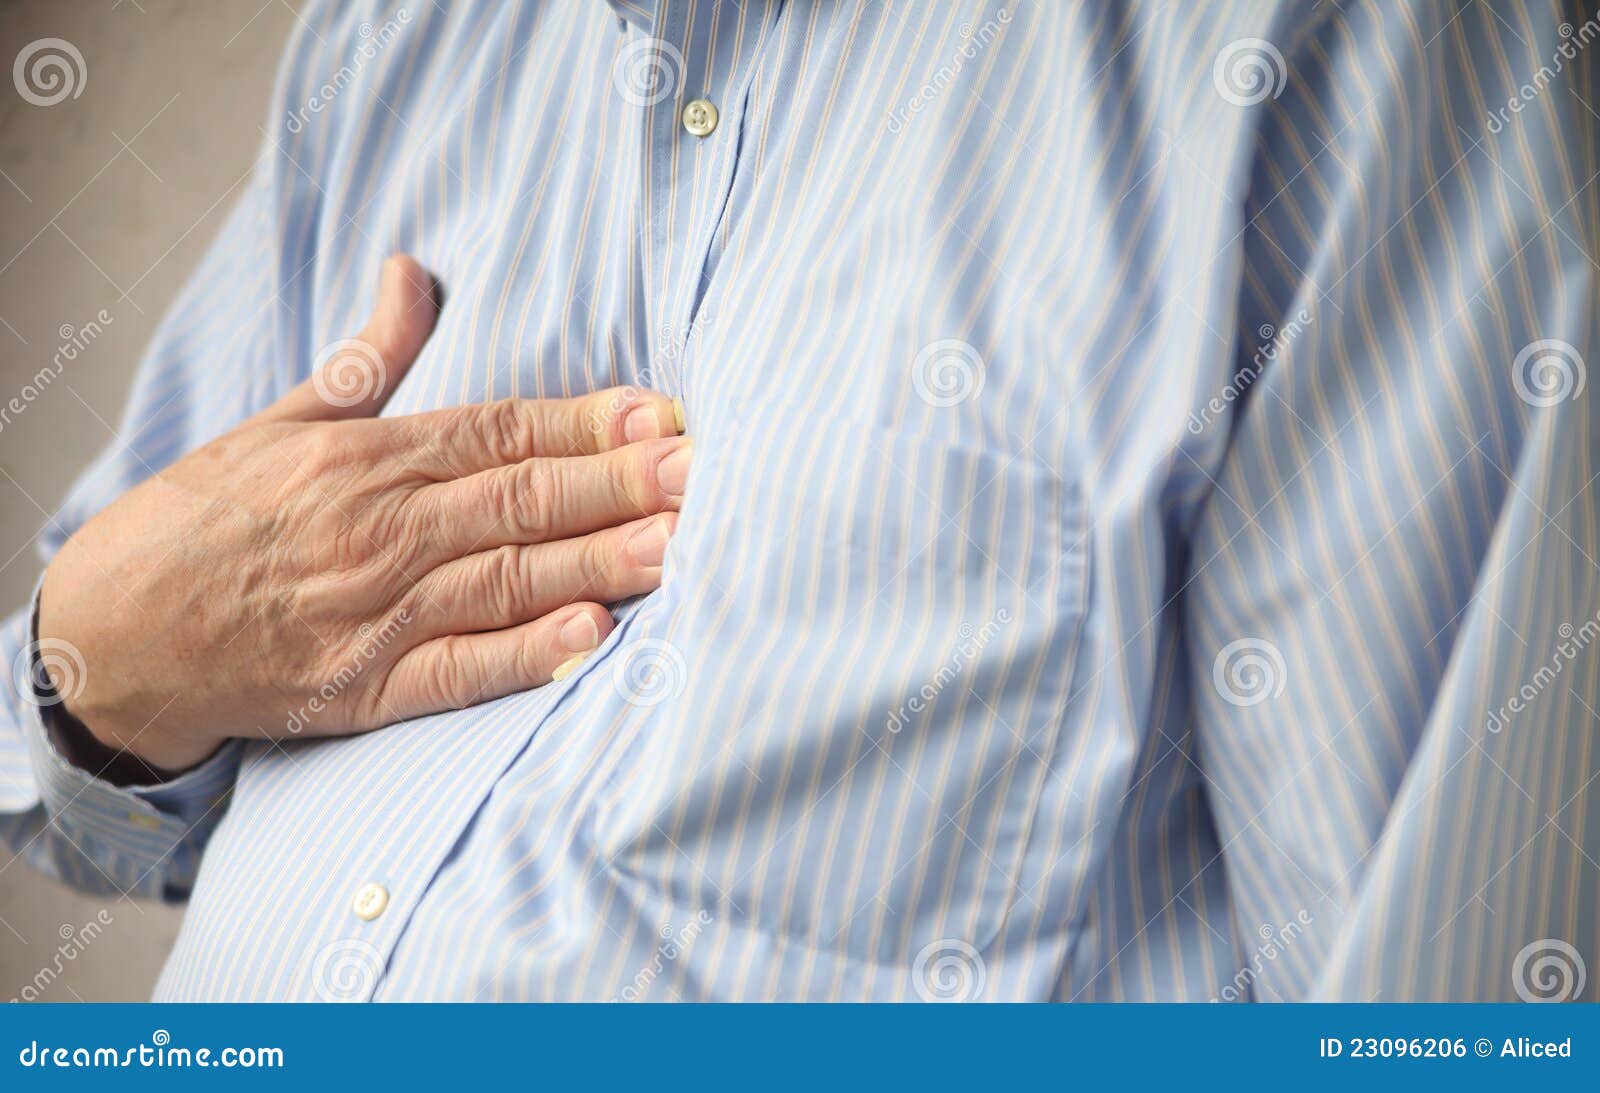 Heartburn pain stock photo. Image of health, male, reflux ...